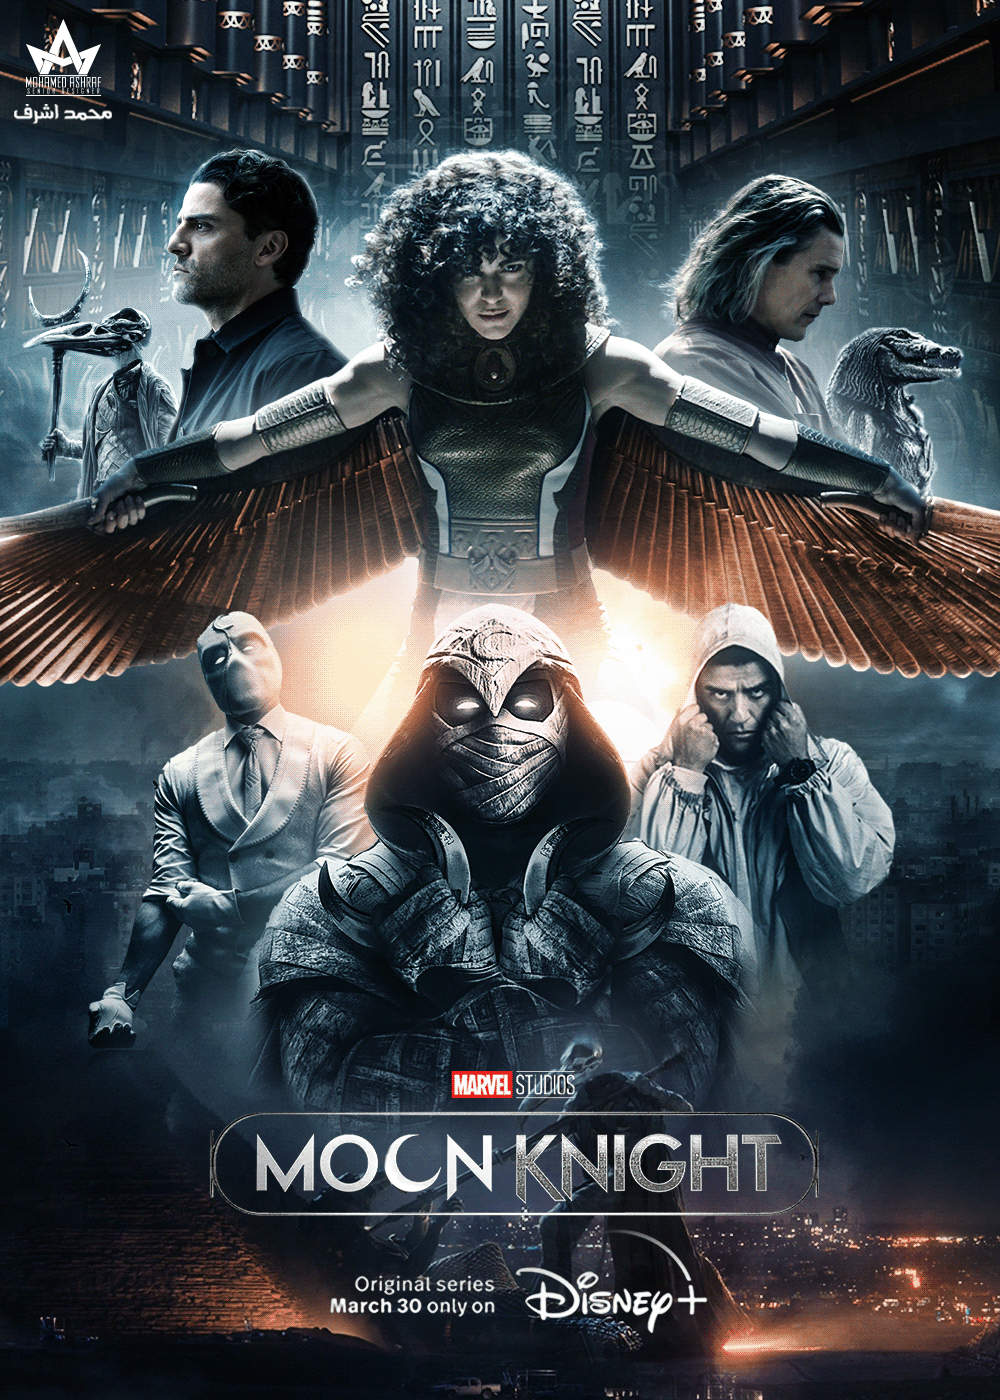 Moon knight poster on Behance